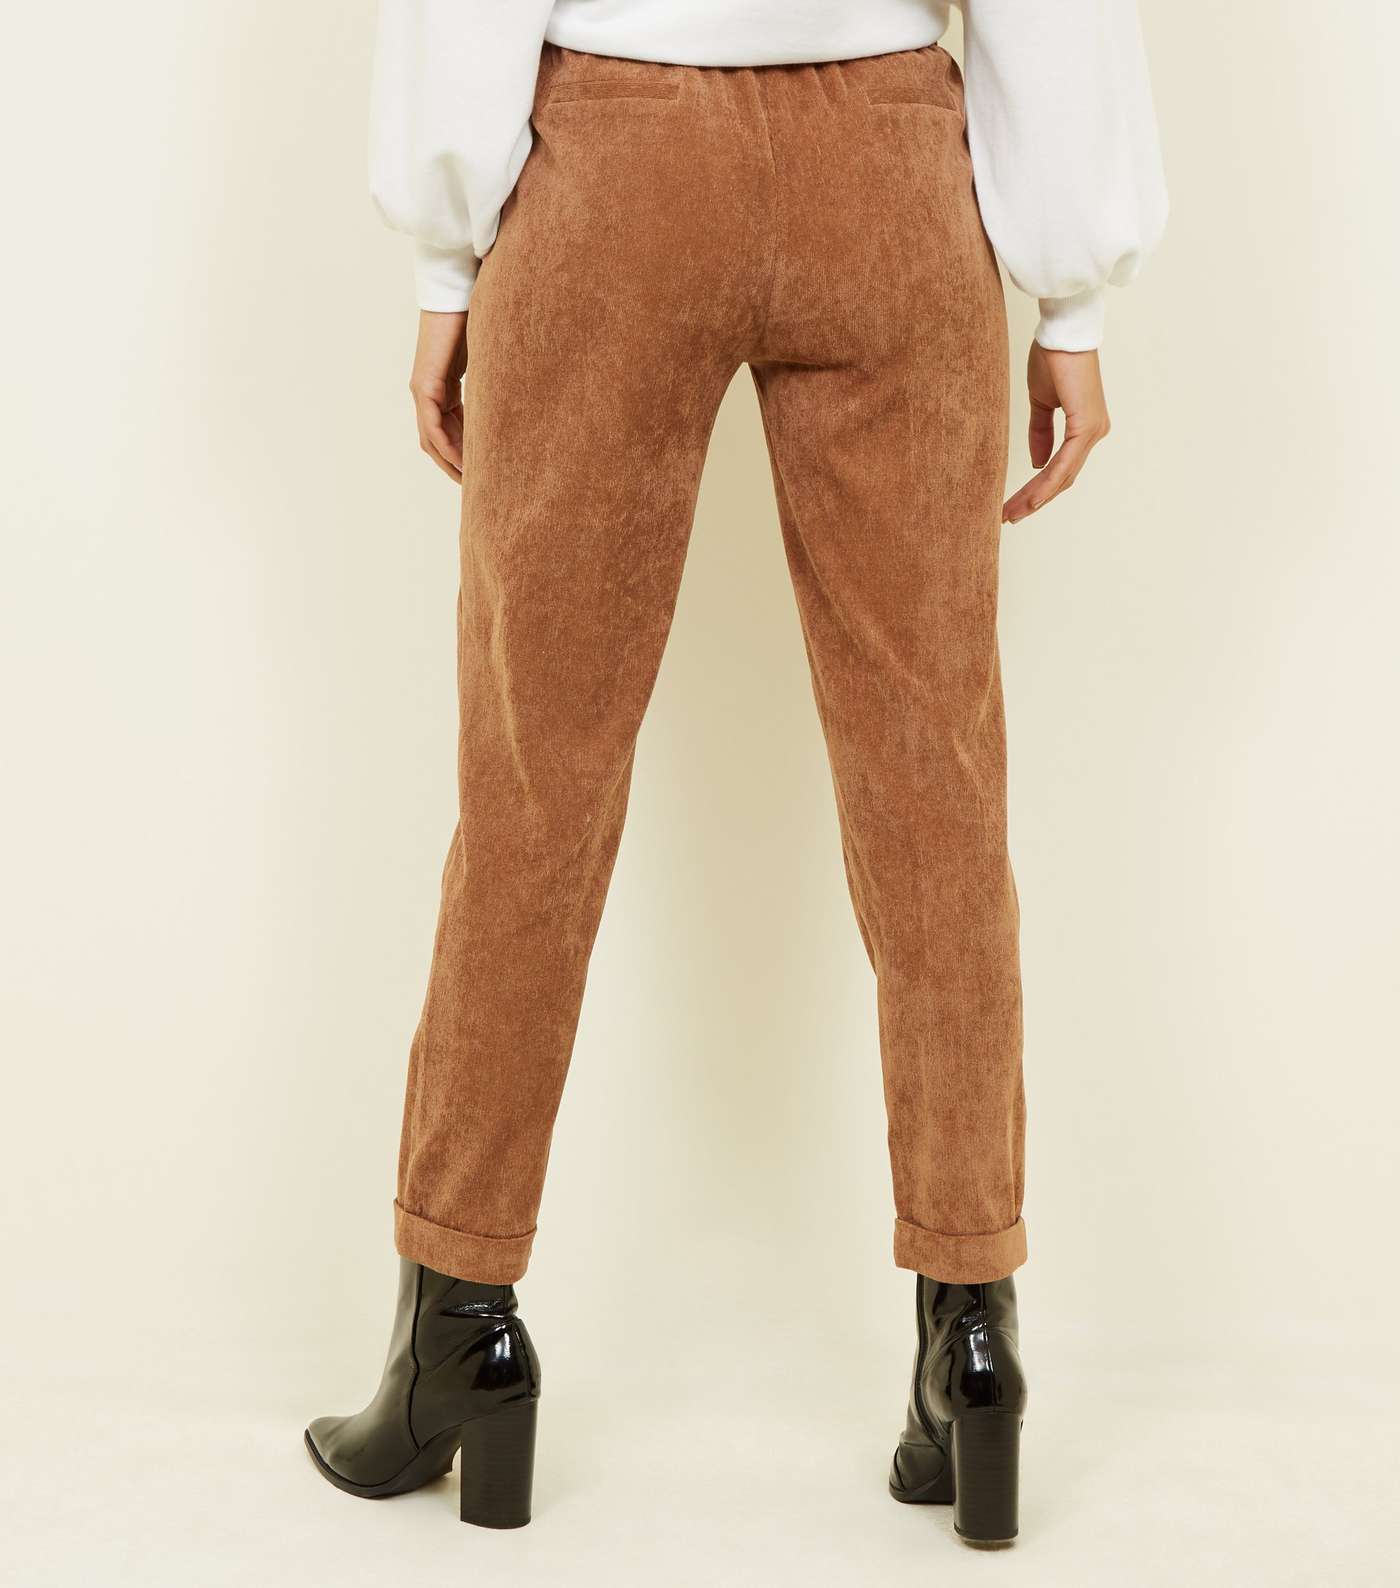 Cameo Rose Tan Mini Corduroy Tapered Trousers Image 3